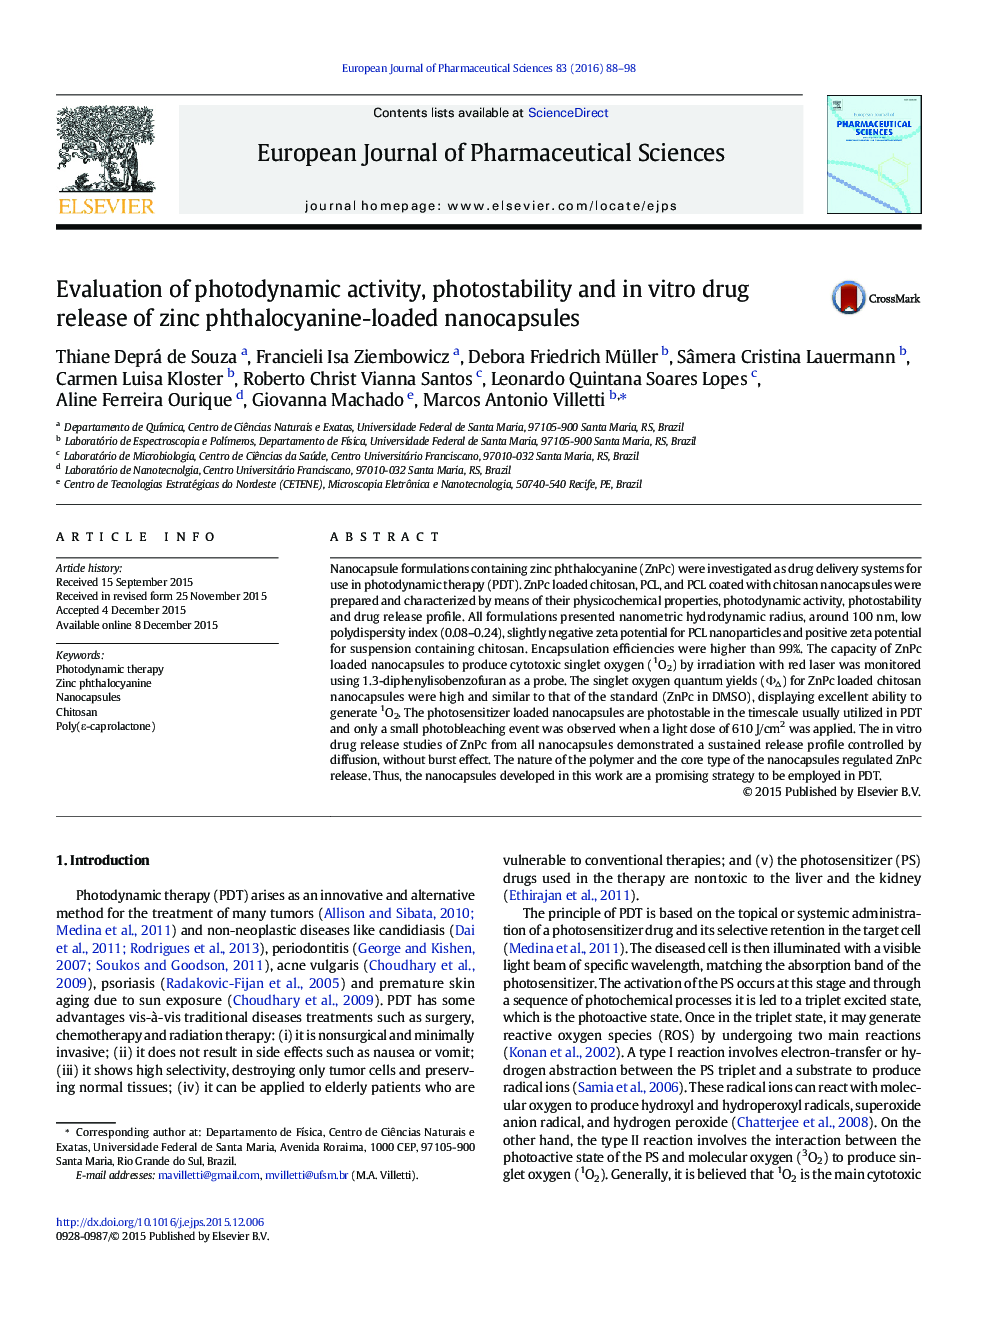 Evaluation of photodynamic activity, photostability and in vitro drug release of zinc phthalocyanine-loaded nanocapsules